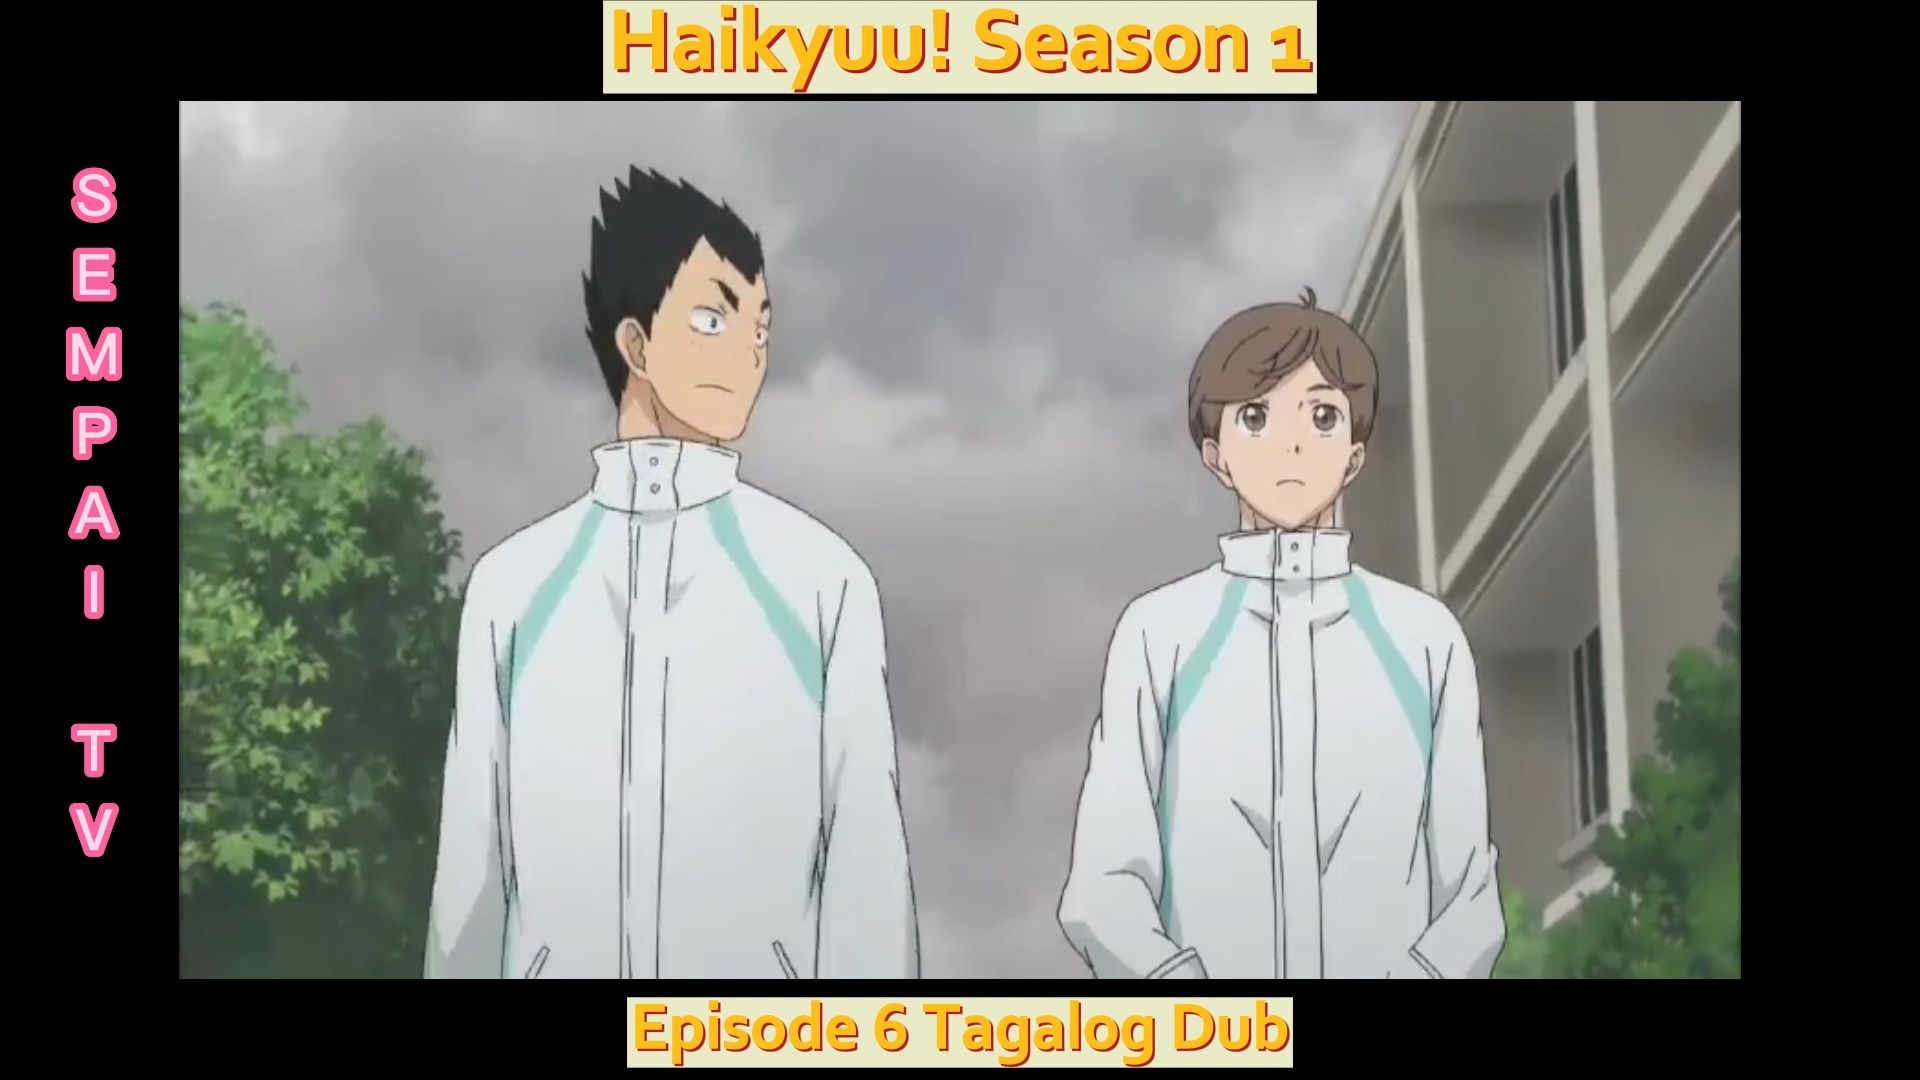 Haikyuu Episode 1 Tagalog Dubbed Part 1, Season 1